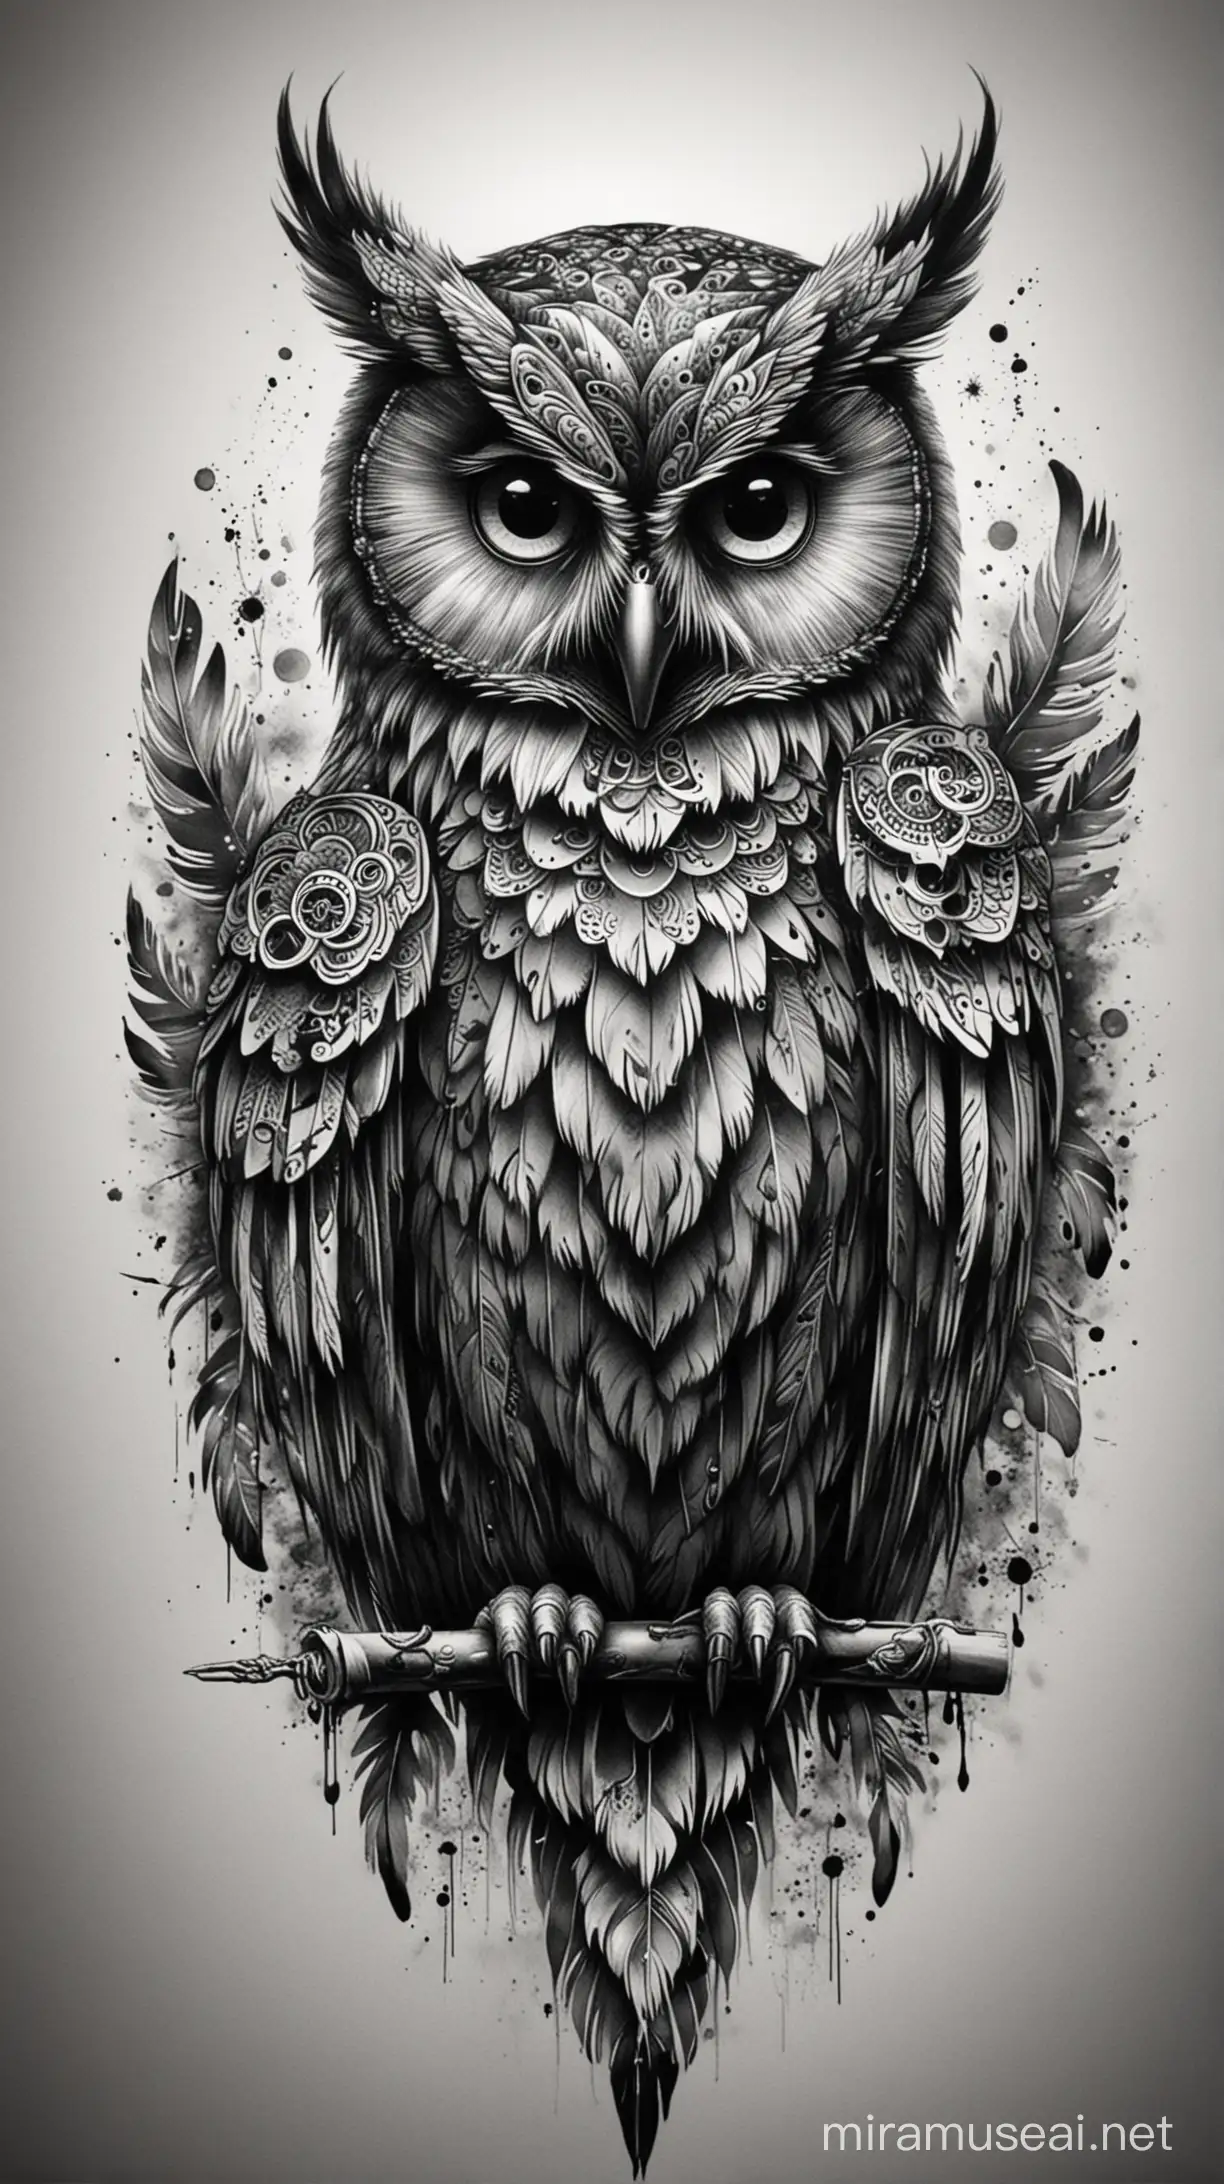 Metallic Owl Tattoo Design Intricate Artwork in Monochrome